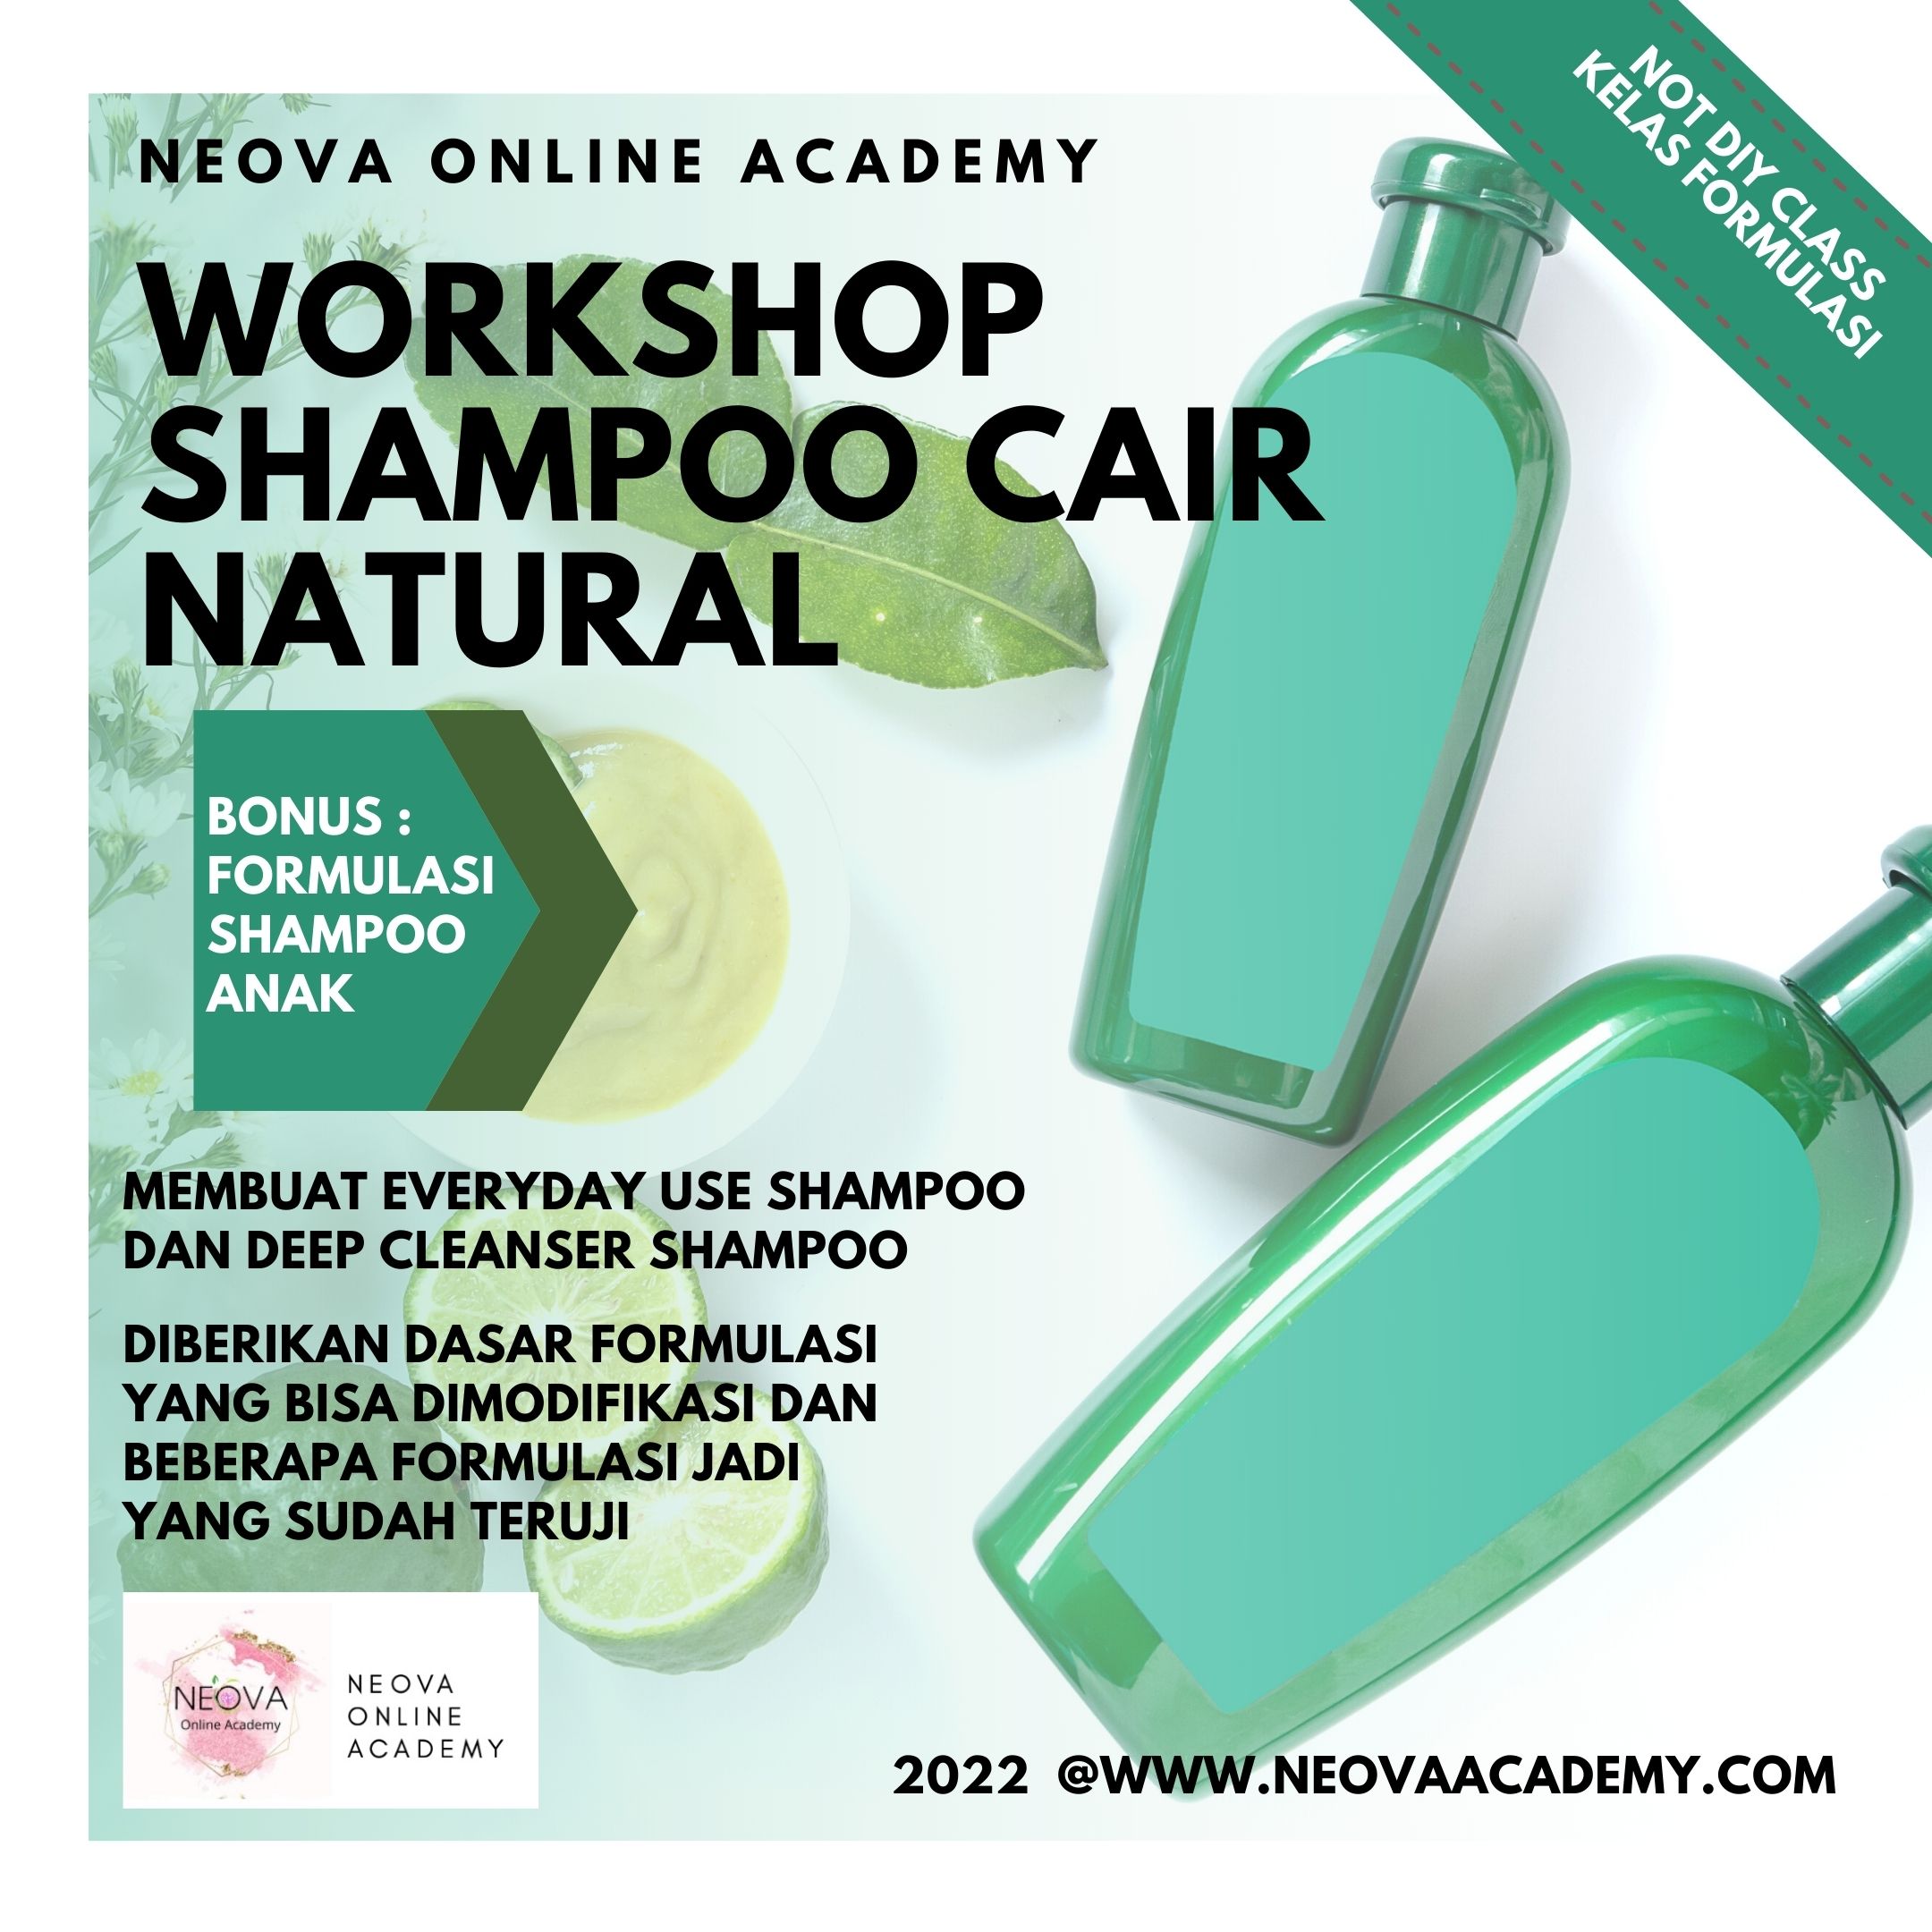 Workshop Shampoo Cair Natural